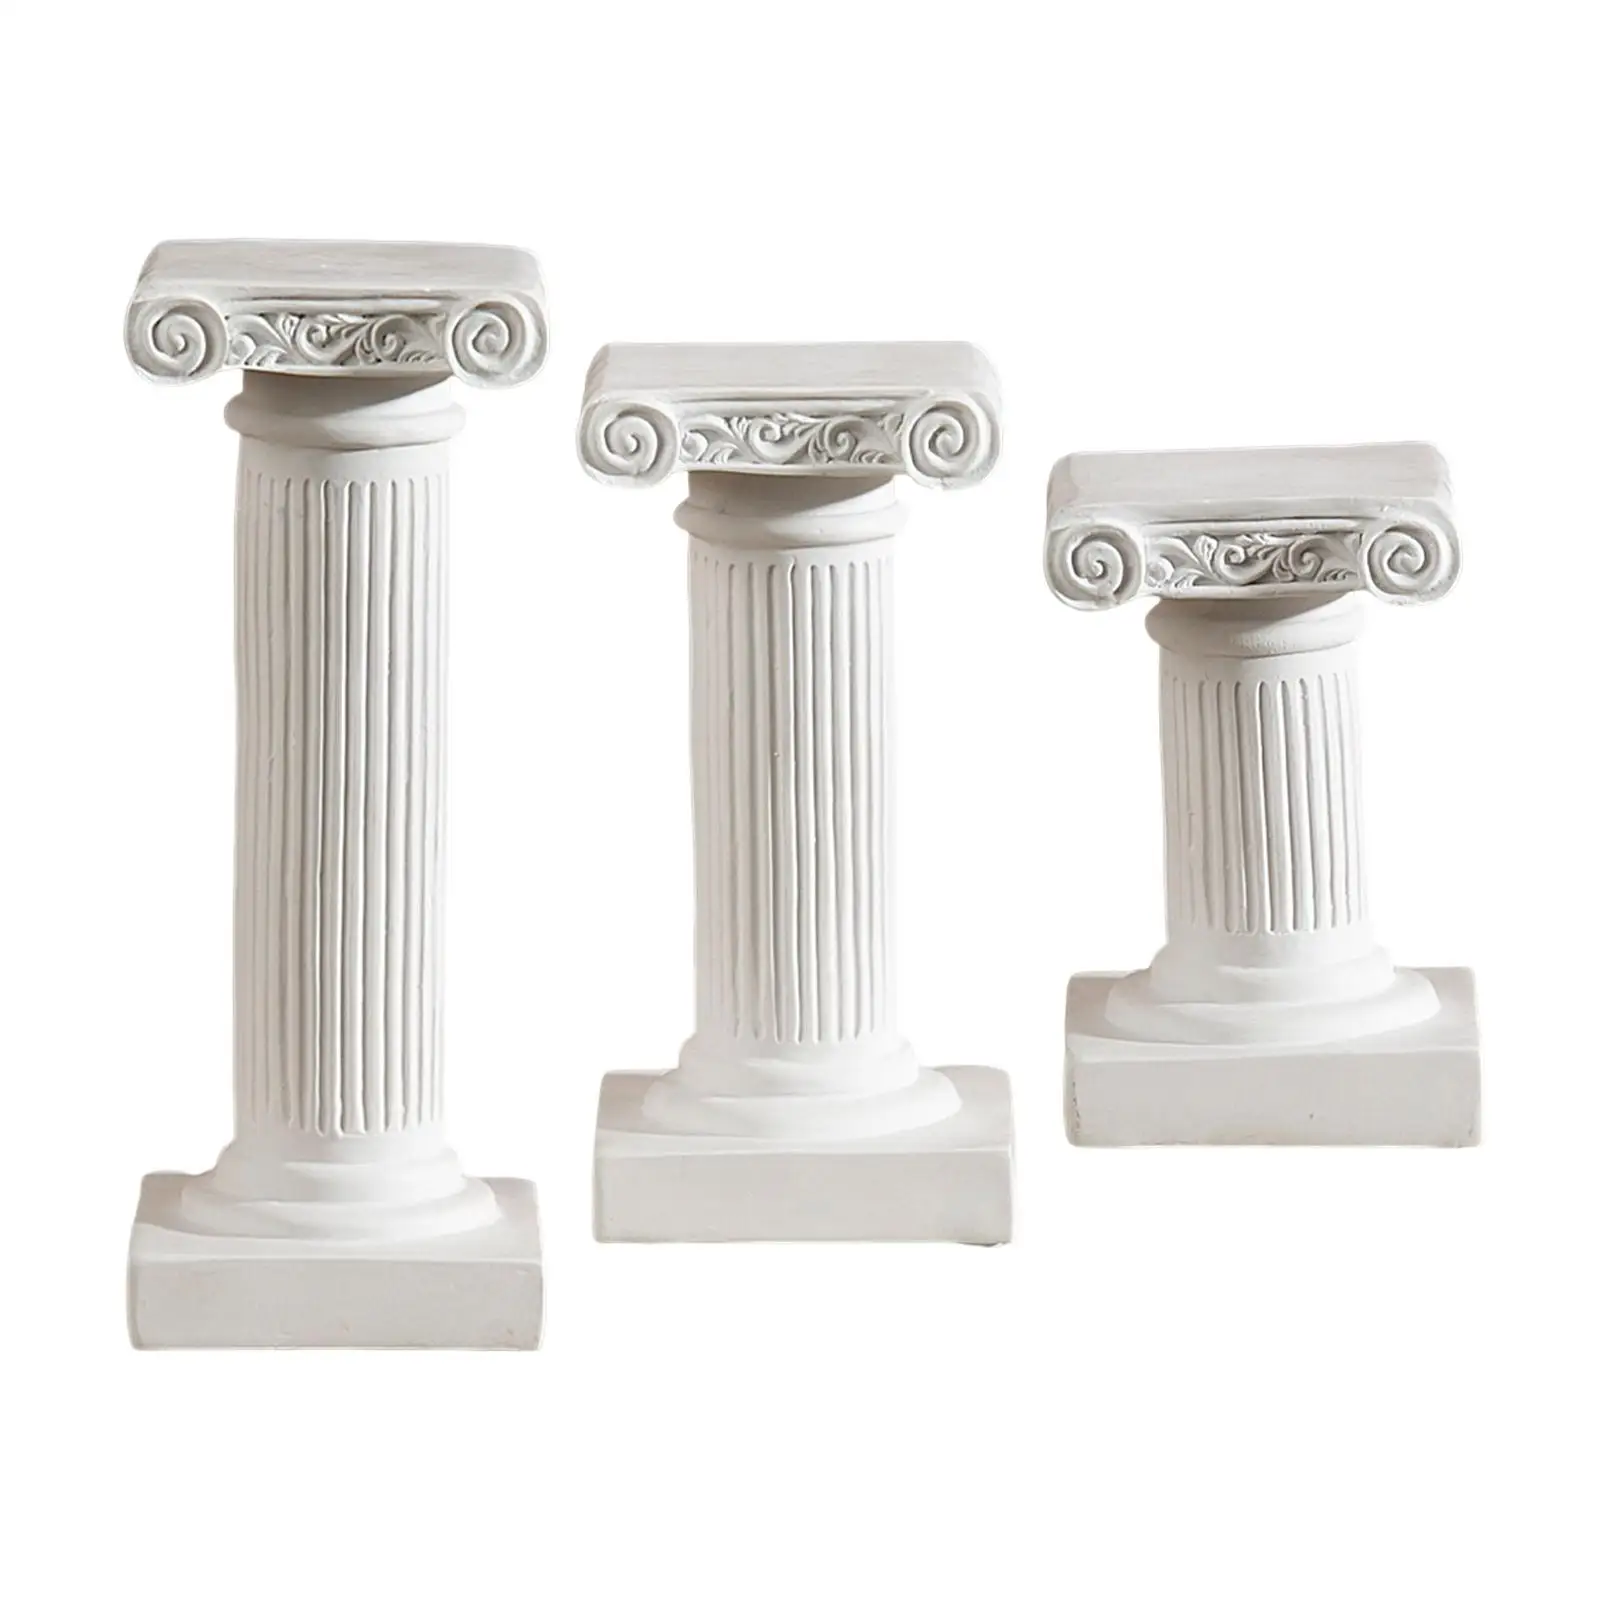 Mini Greek Columns Alabaster Sculpture Cast Resin Home Decor Table Centerpieces White Roman Columns for Courtyard Art Wedding